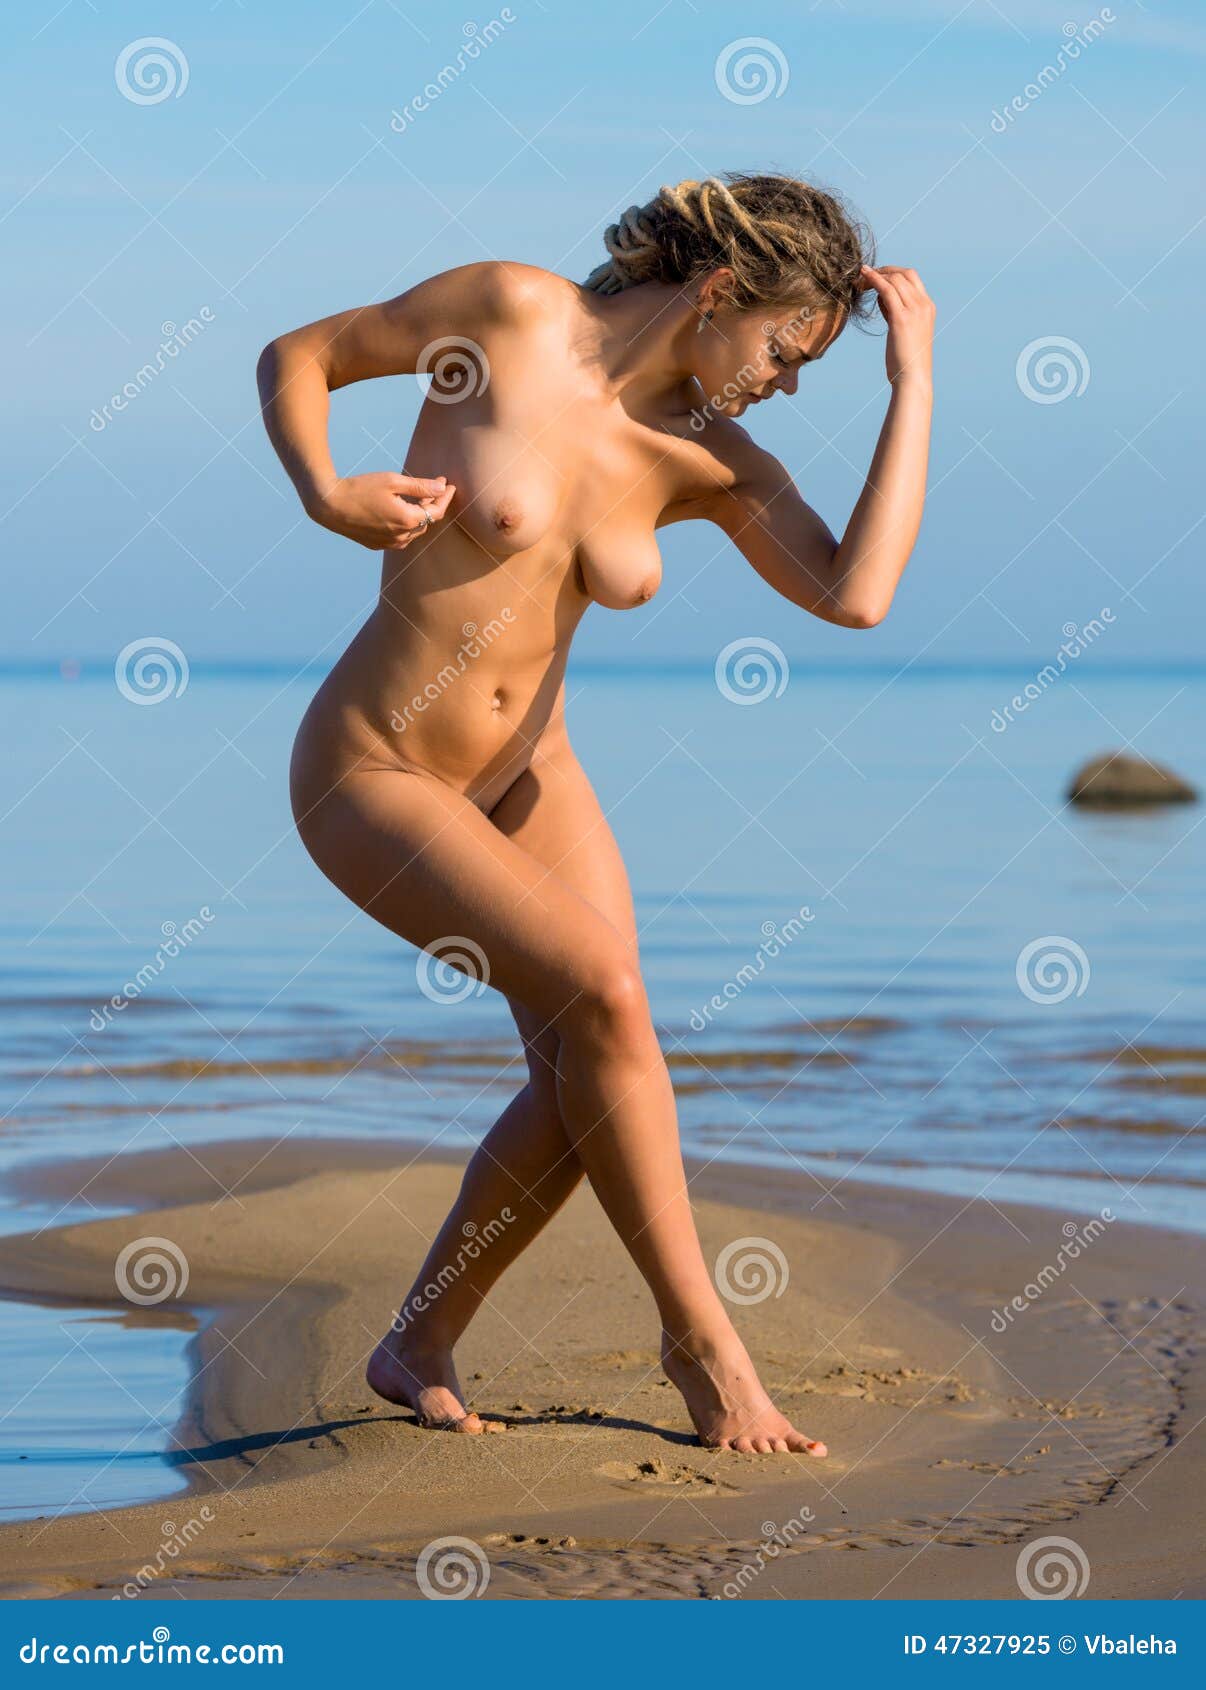 christopher dulaney add photo beautiful naked women on the beach